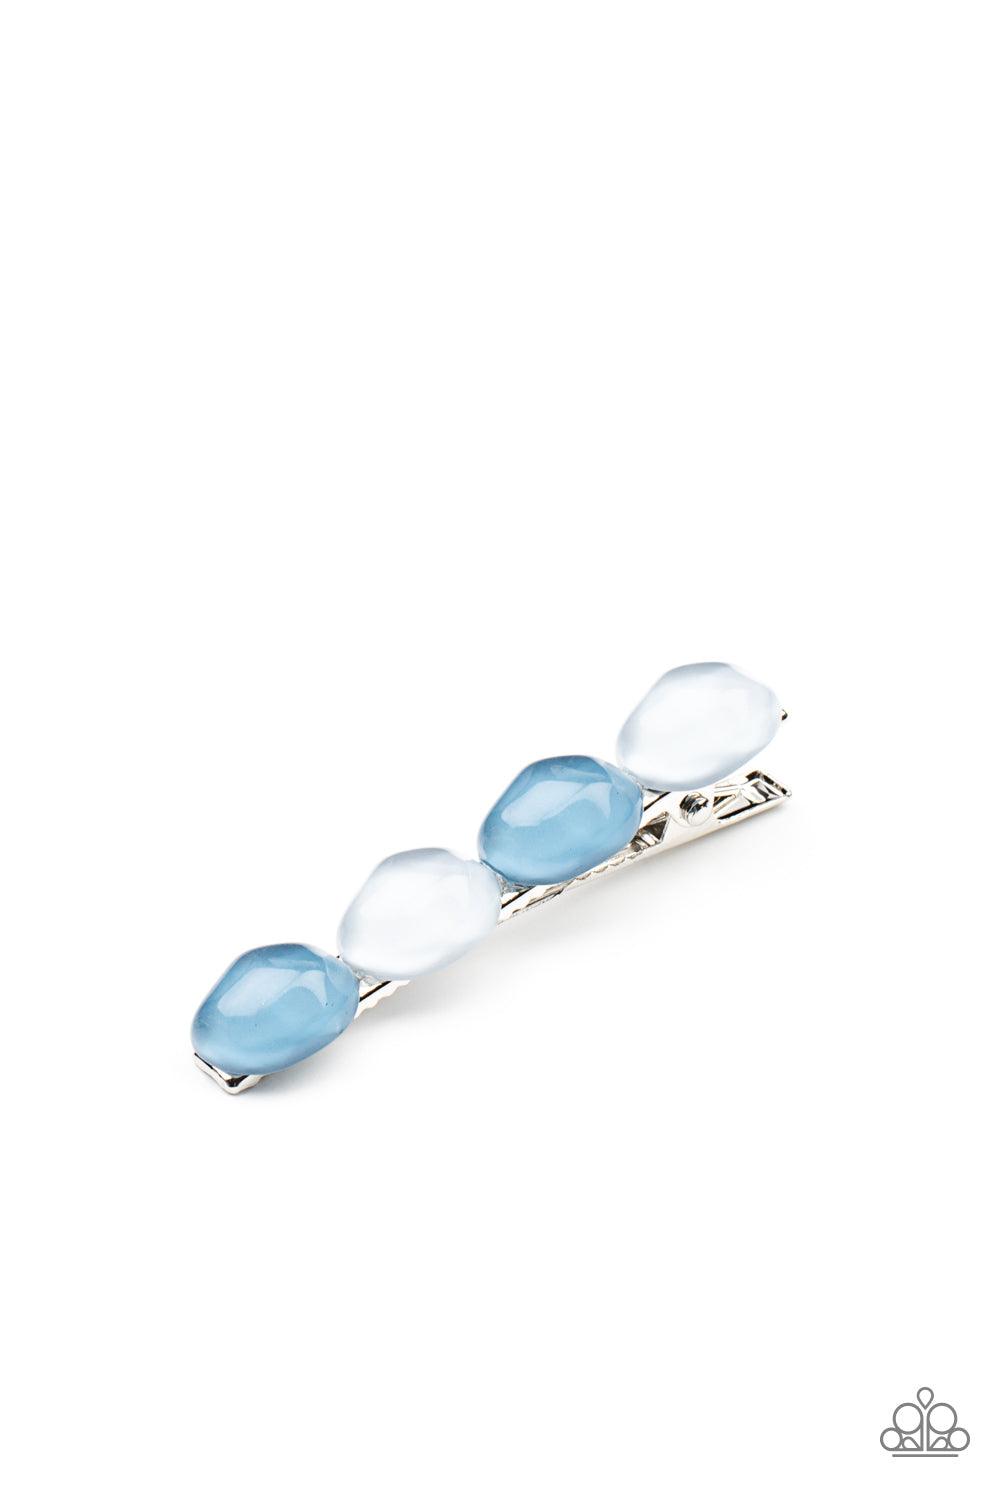 Bubbly Reflections Blue Hair Clip - Jewelry by Bretta - Jewelry by Bretta